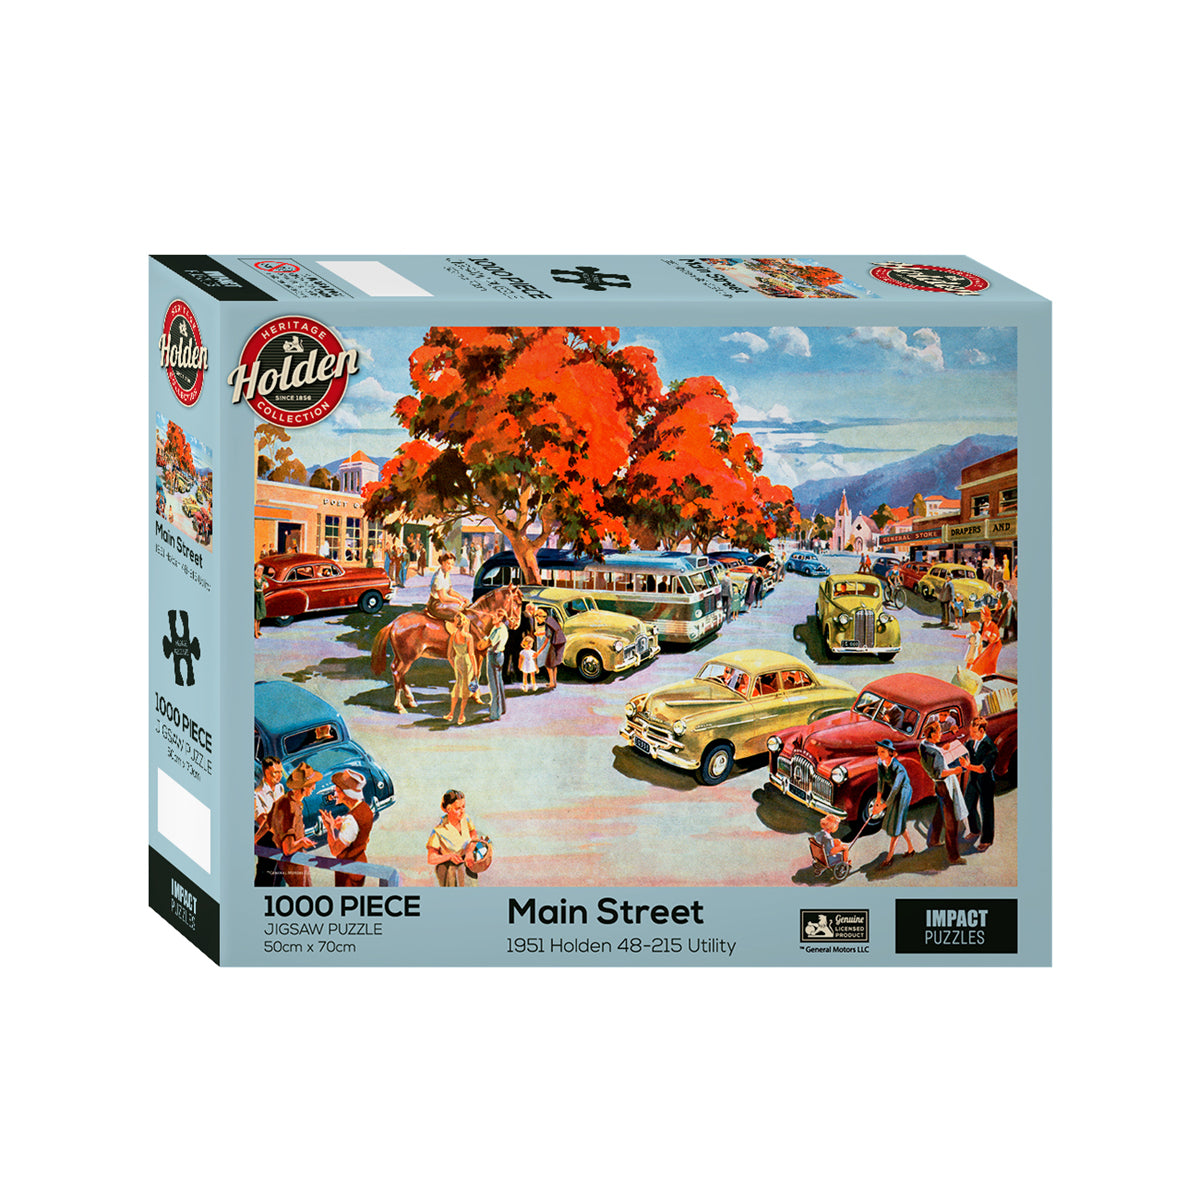 Holden Puzzle - Main Street